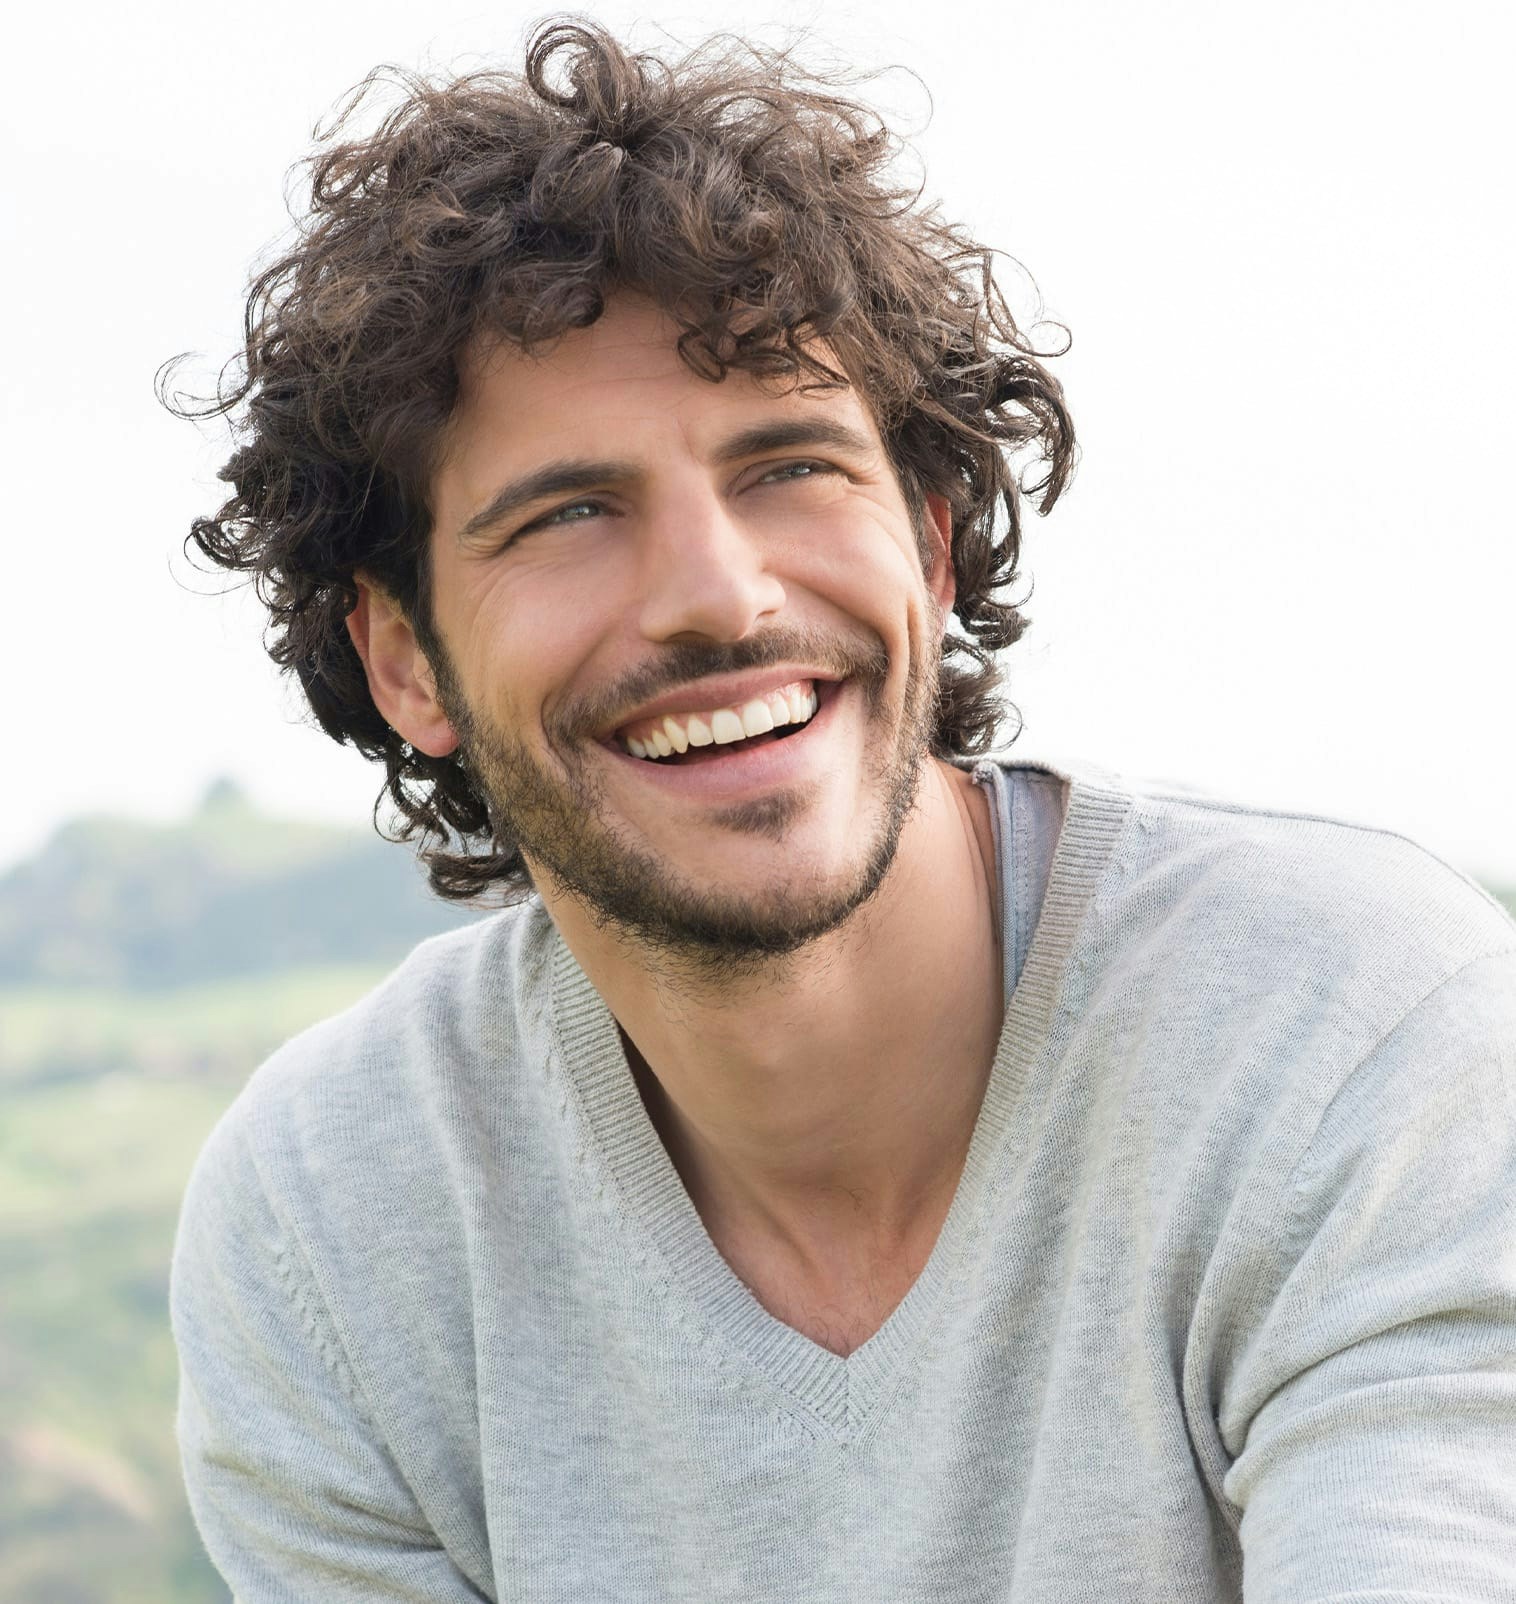 Man with facial hair smiling